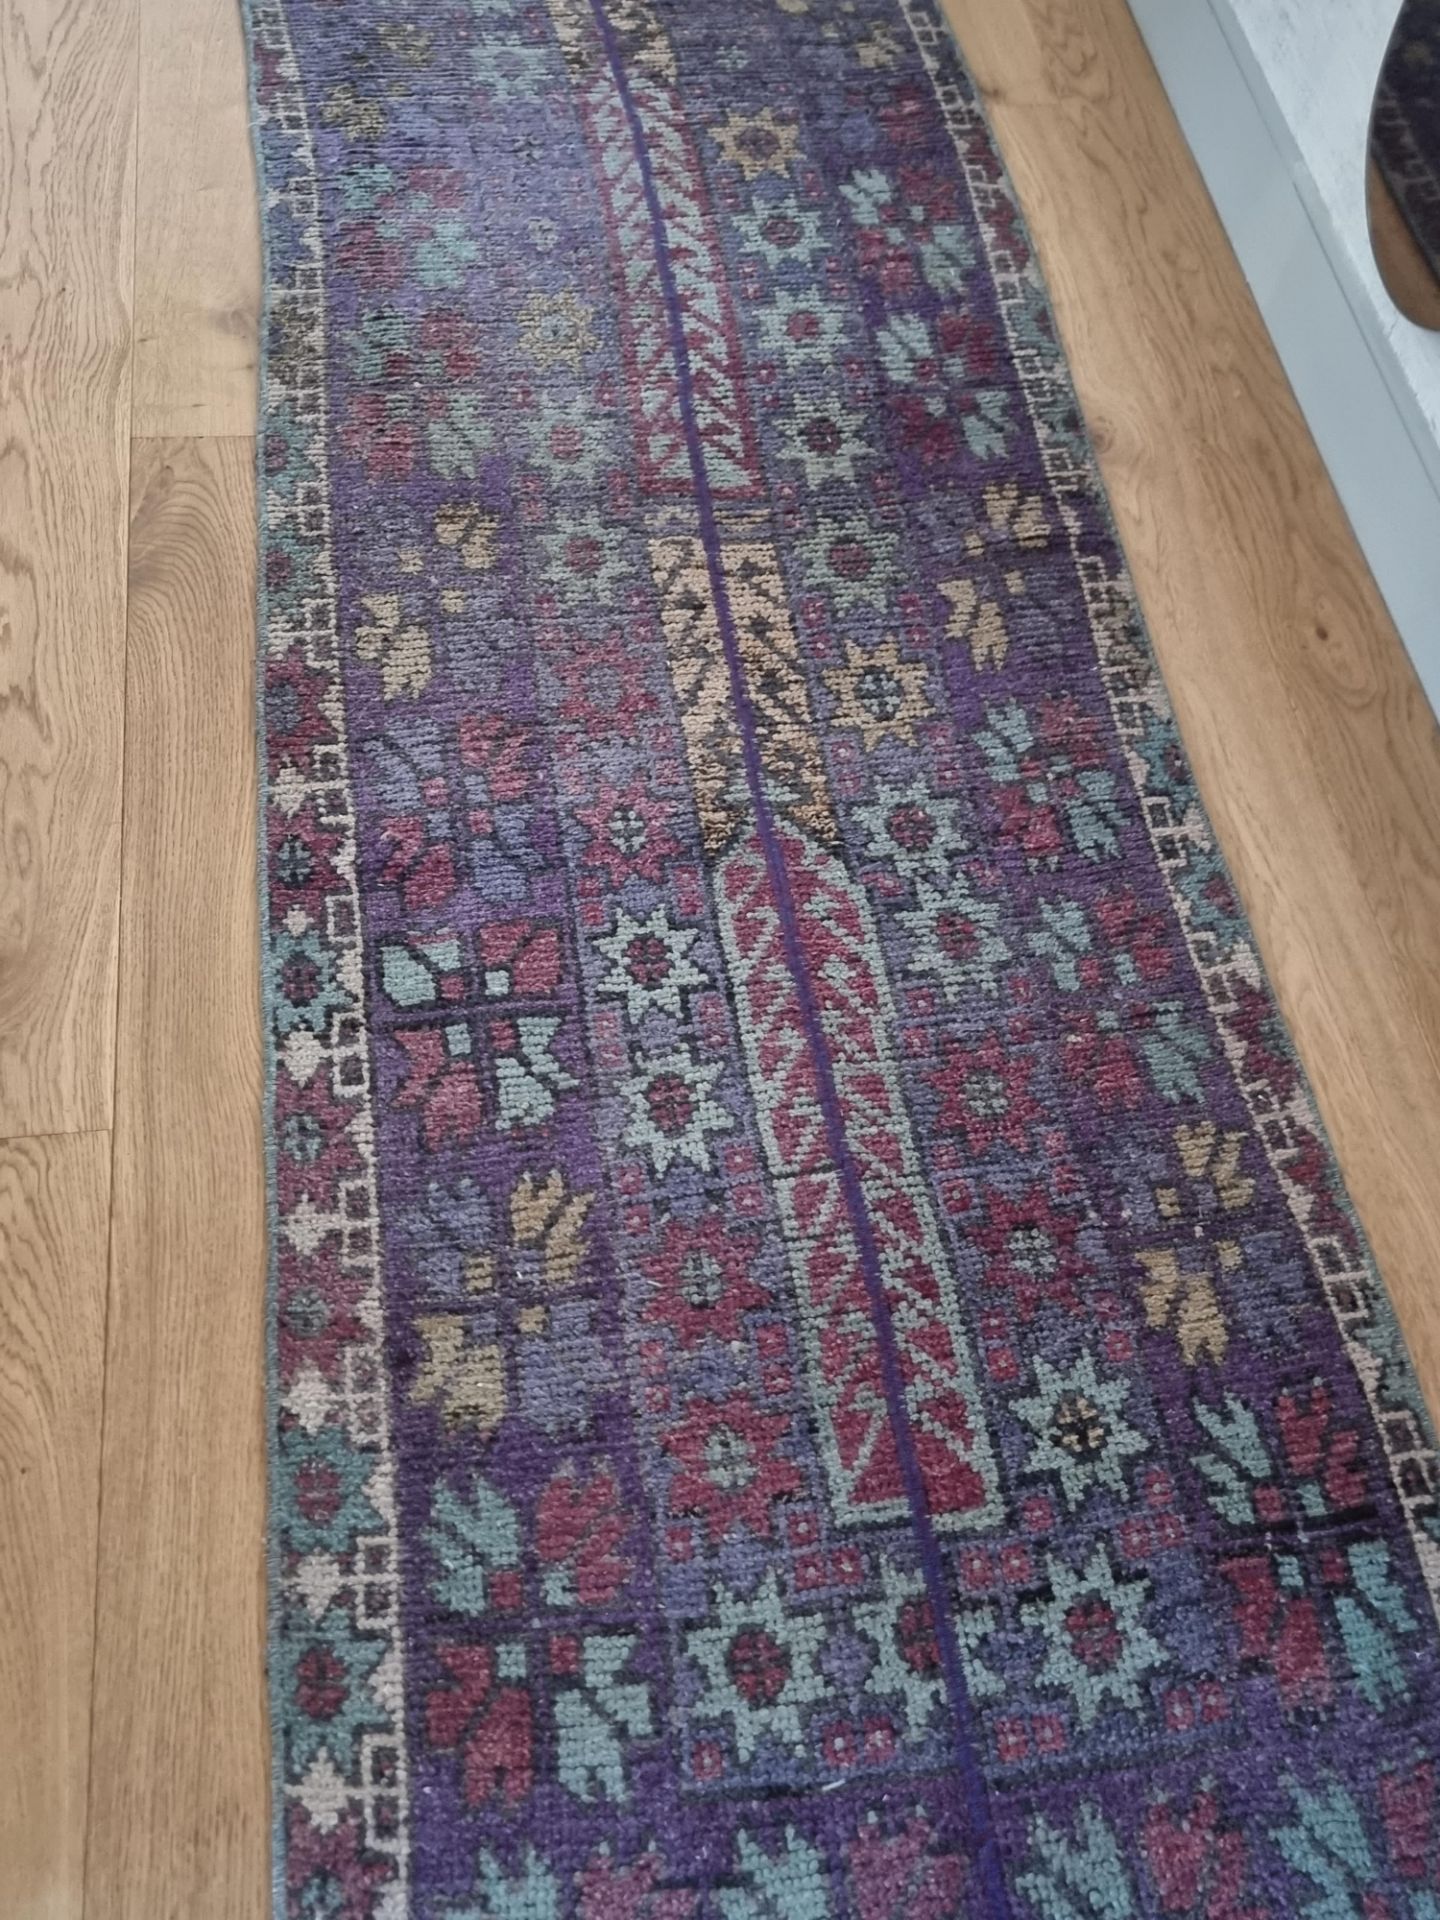 Oushak Laight Turkish wool rug runner 4.25m x 73cm  (Apt 1) - Image 2 of 3